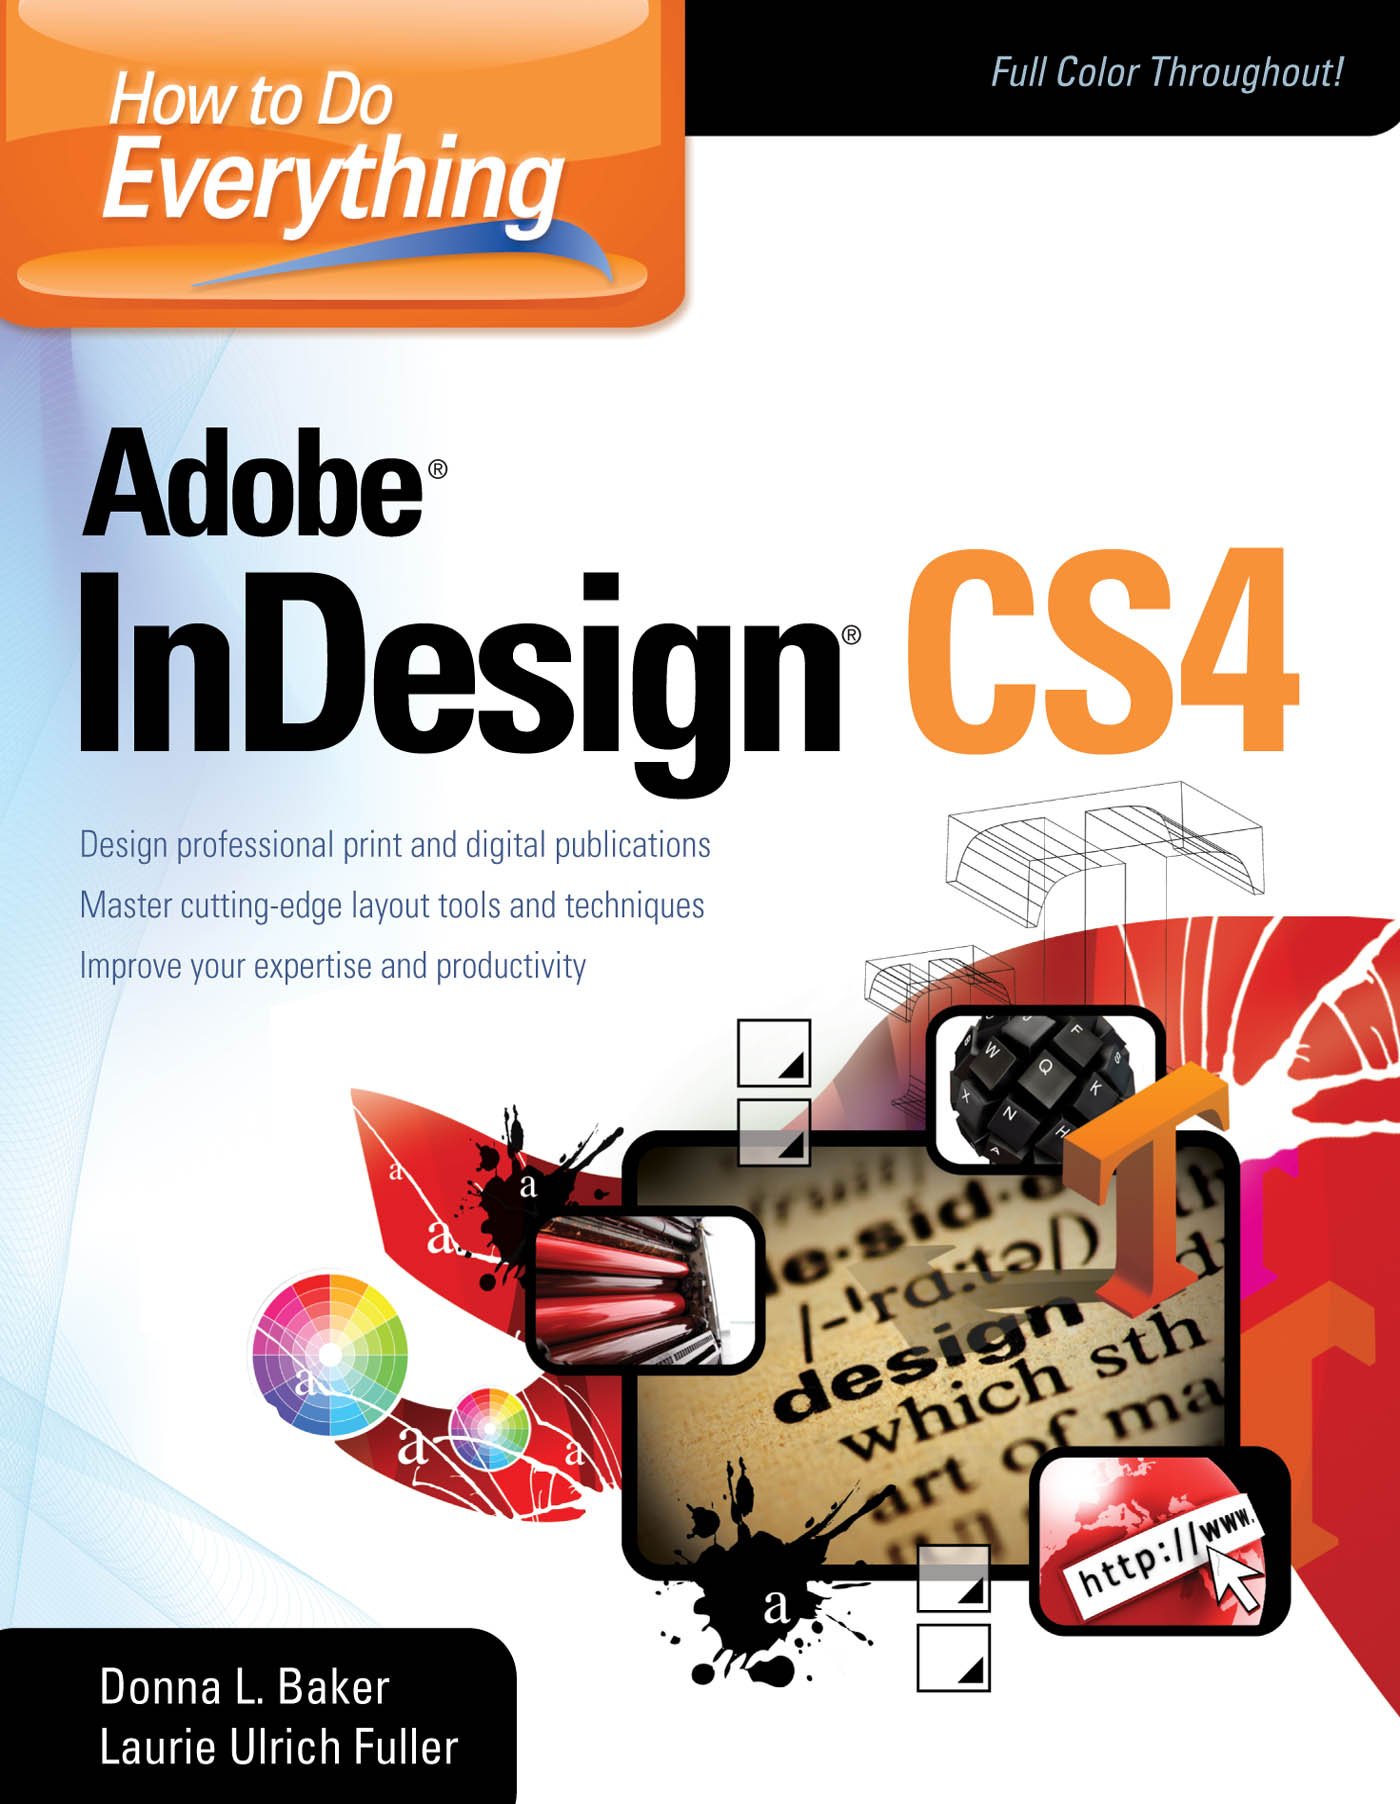 adobe indesign cs4 free download full version